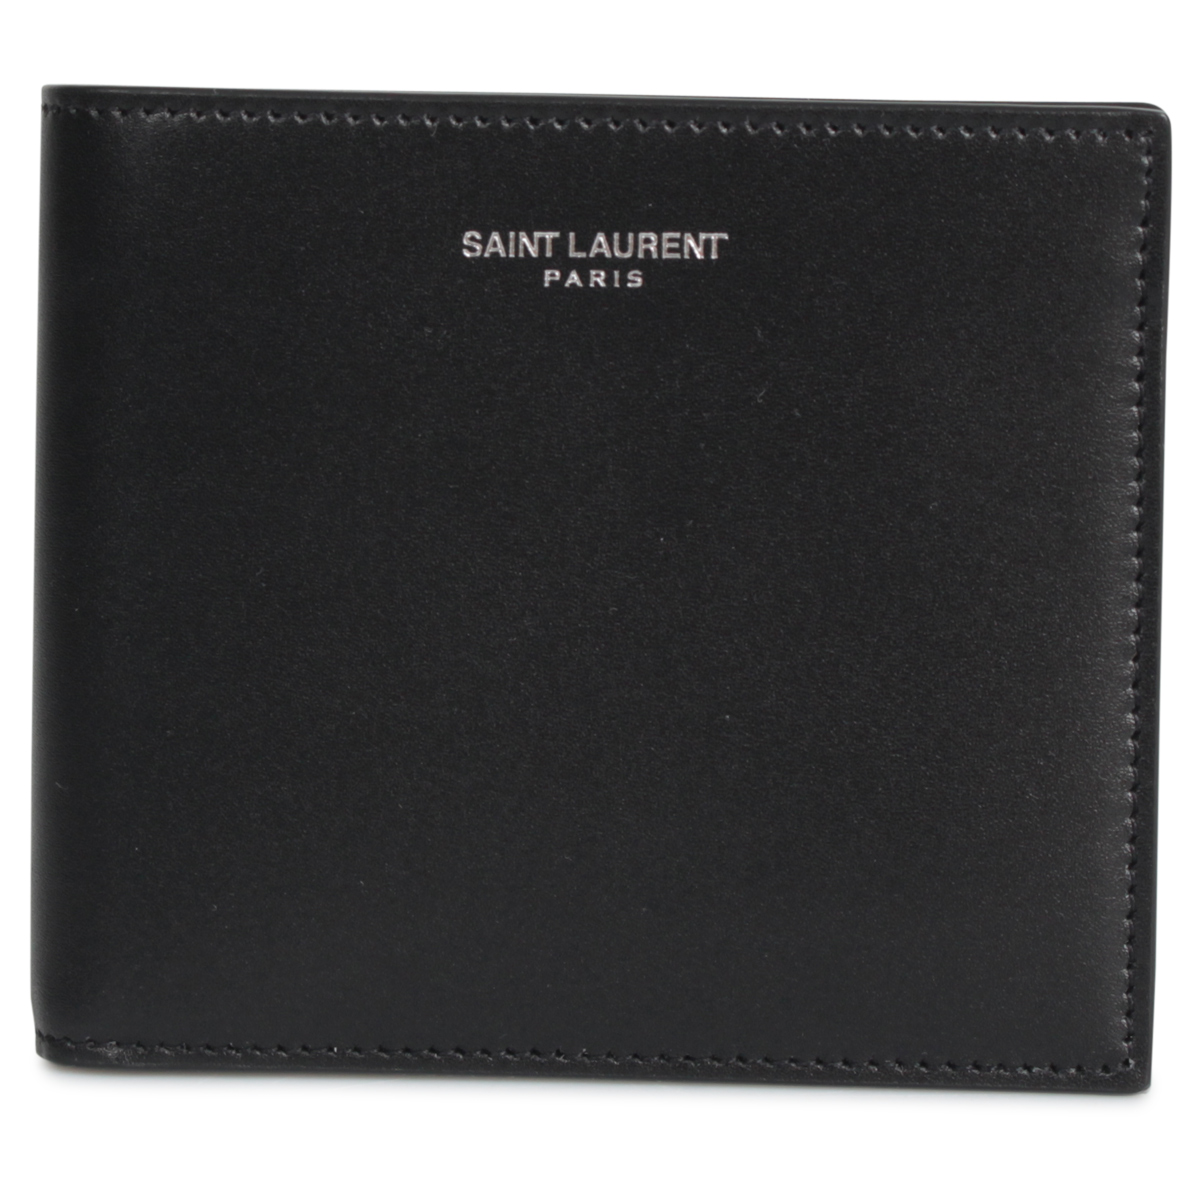 SAINT LAURENT PARIS サンローラン パリ 財布 二つ折り メンズ EAST 